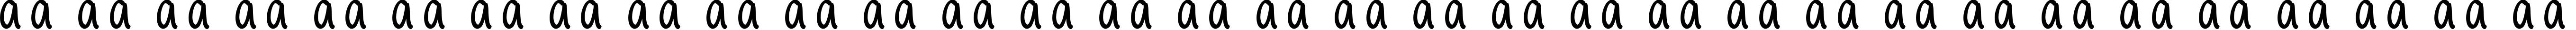 Пример написания русского алфавита шрифтом yelly